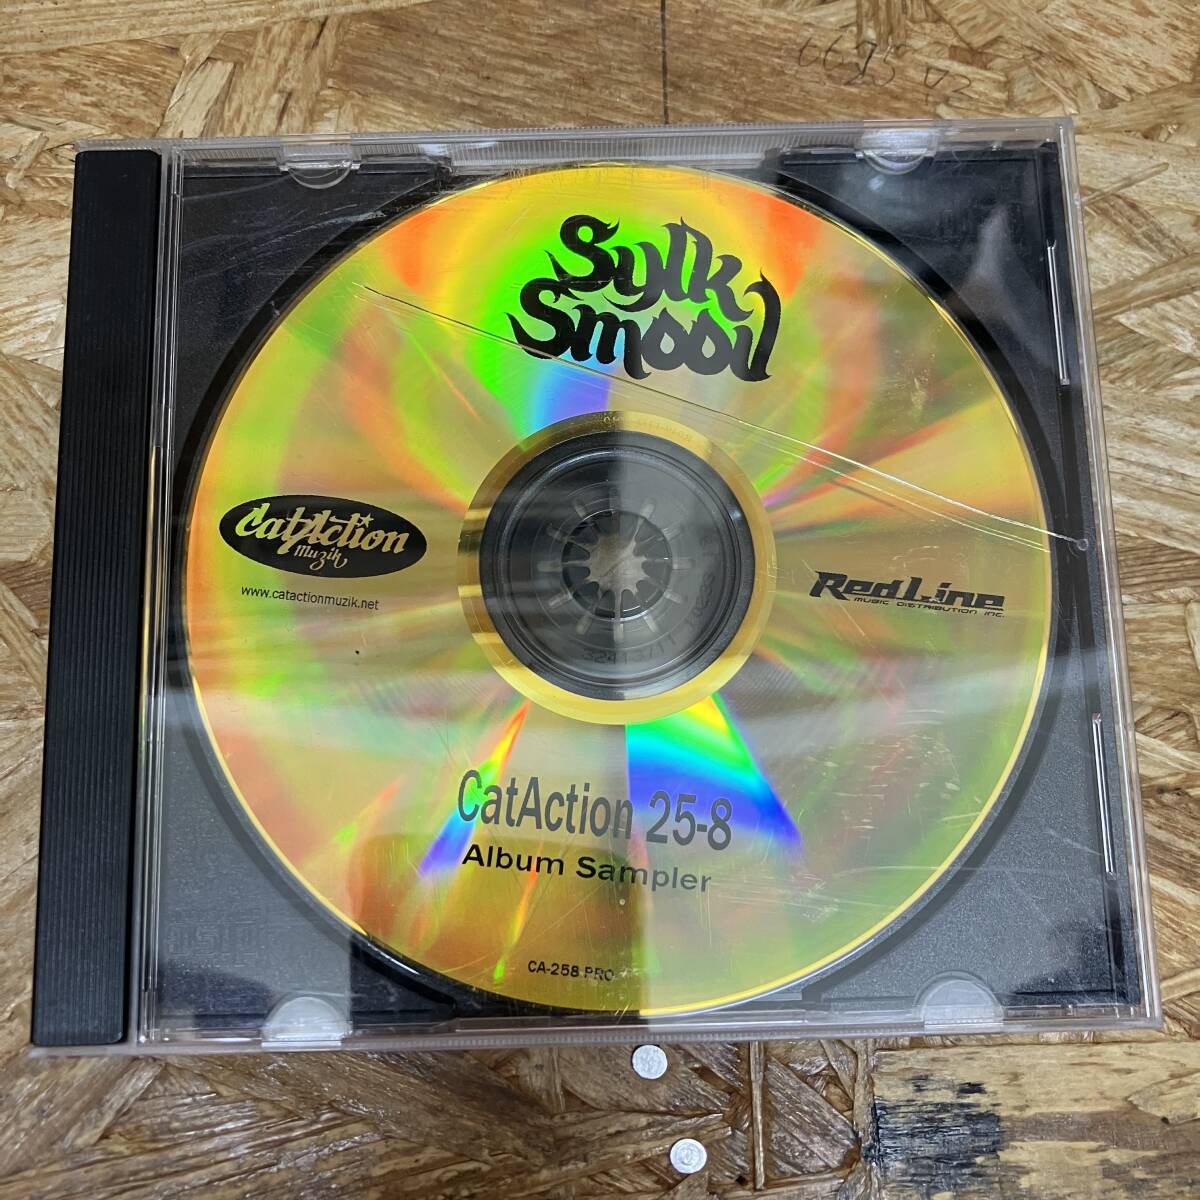 ◎!!! HIPHOP,R&B SYLK SMOOV - CATACTION 25-8 ALBUM SAMPLER シングル CD 中古品_画像1